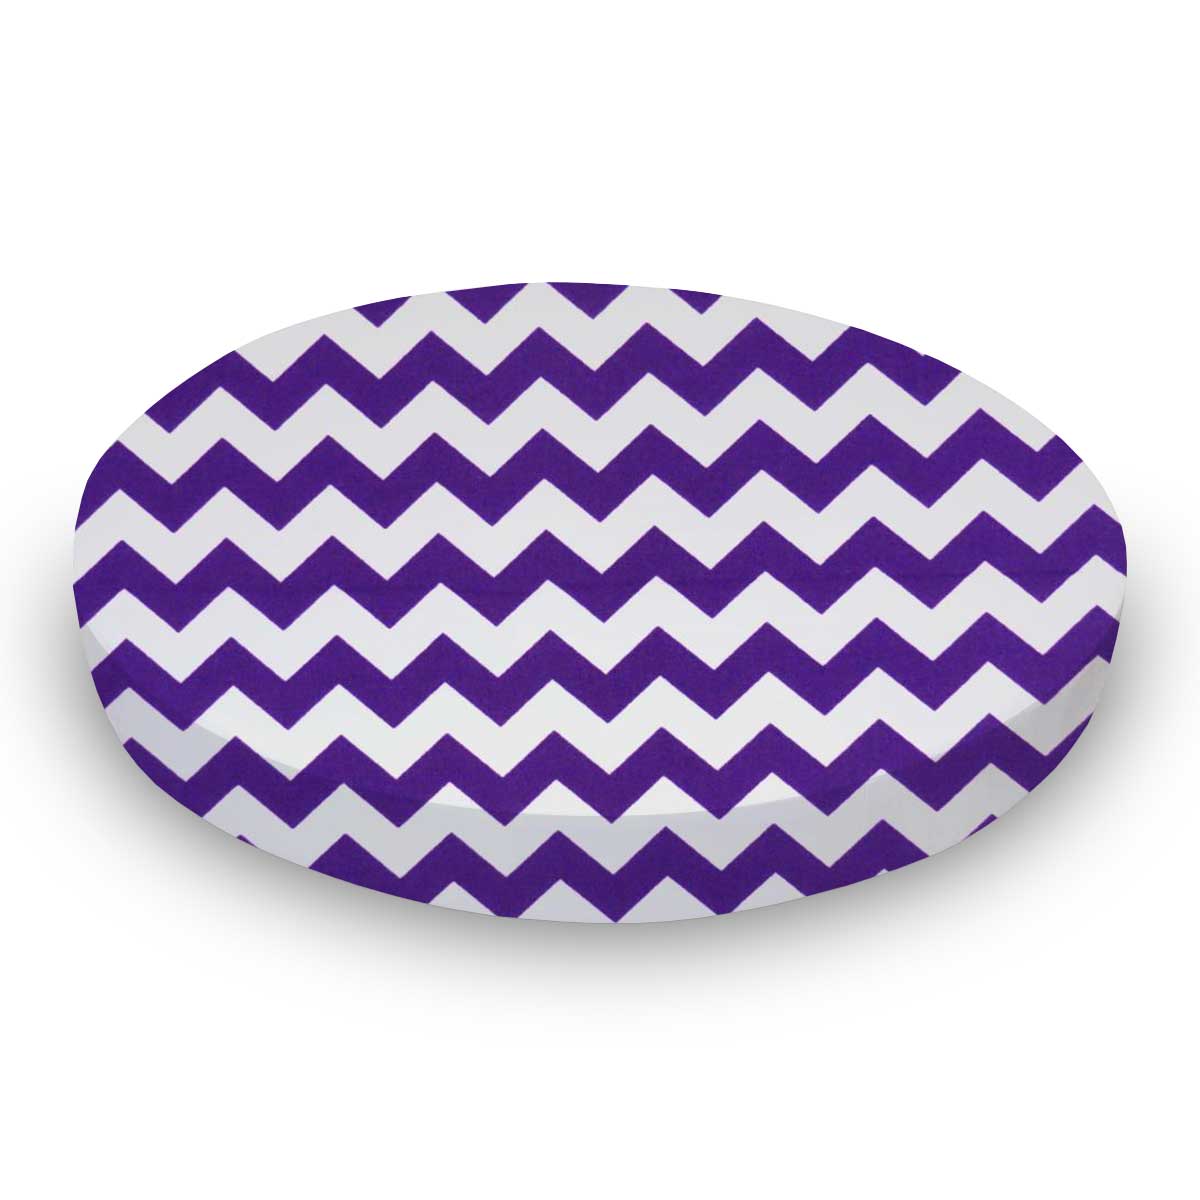 Oval Crib (Stokke Sleepi) - Purple Chevron Zigzag - Fitted  Oval